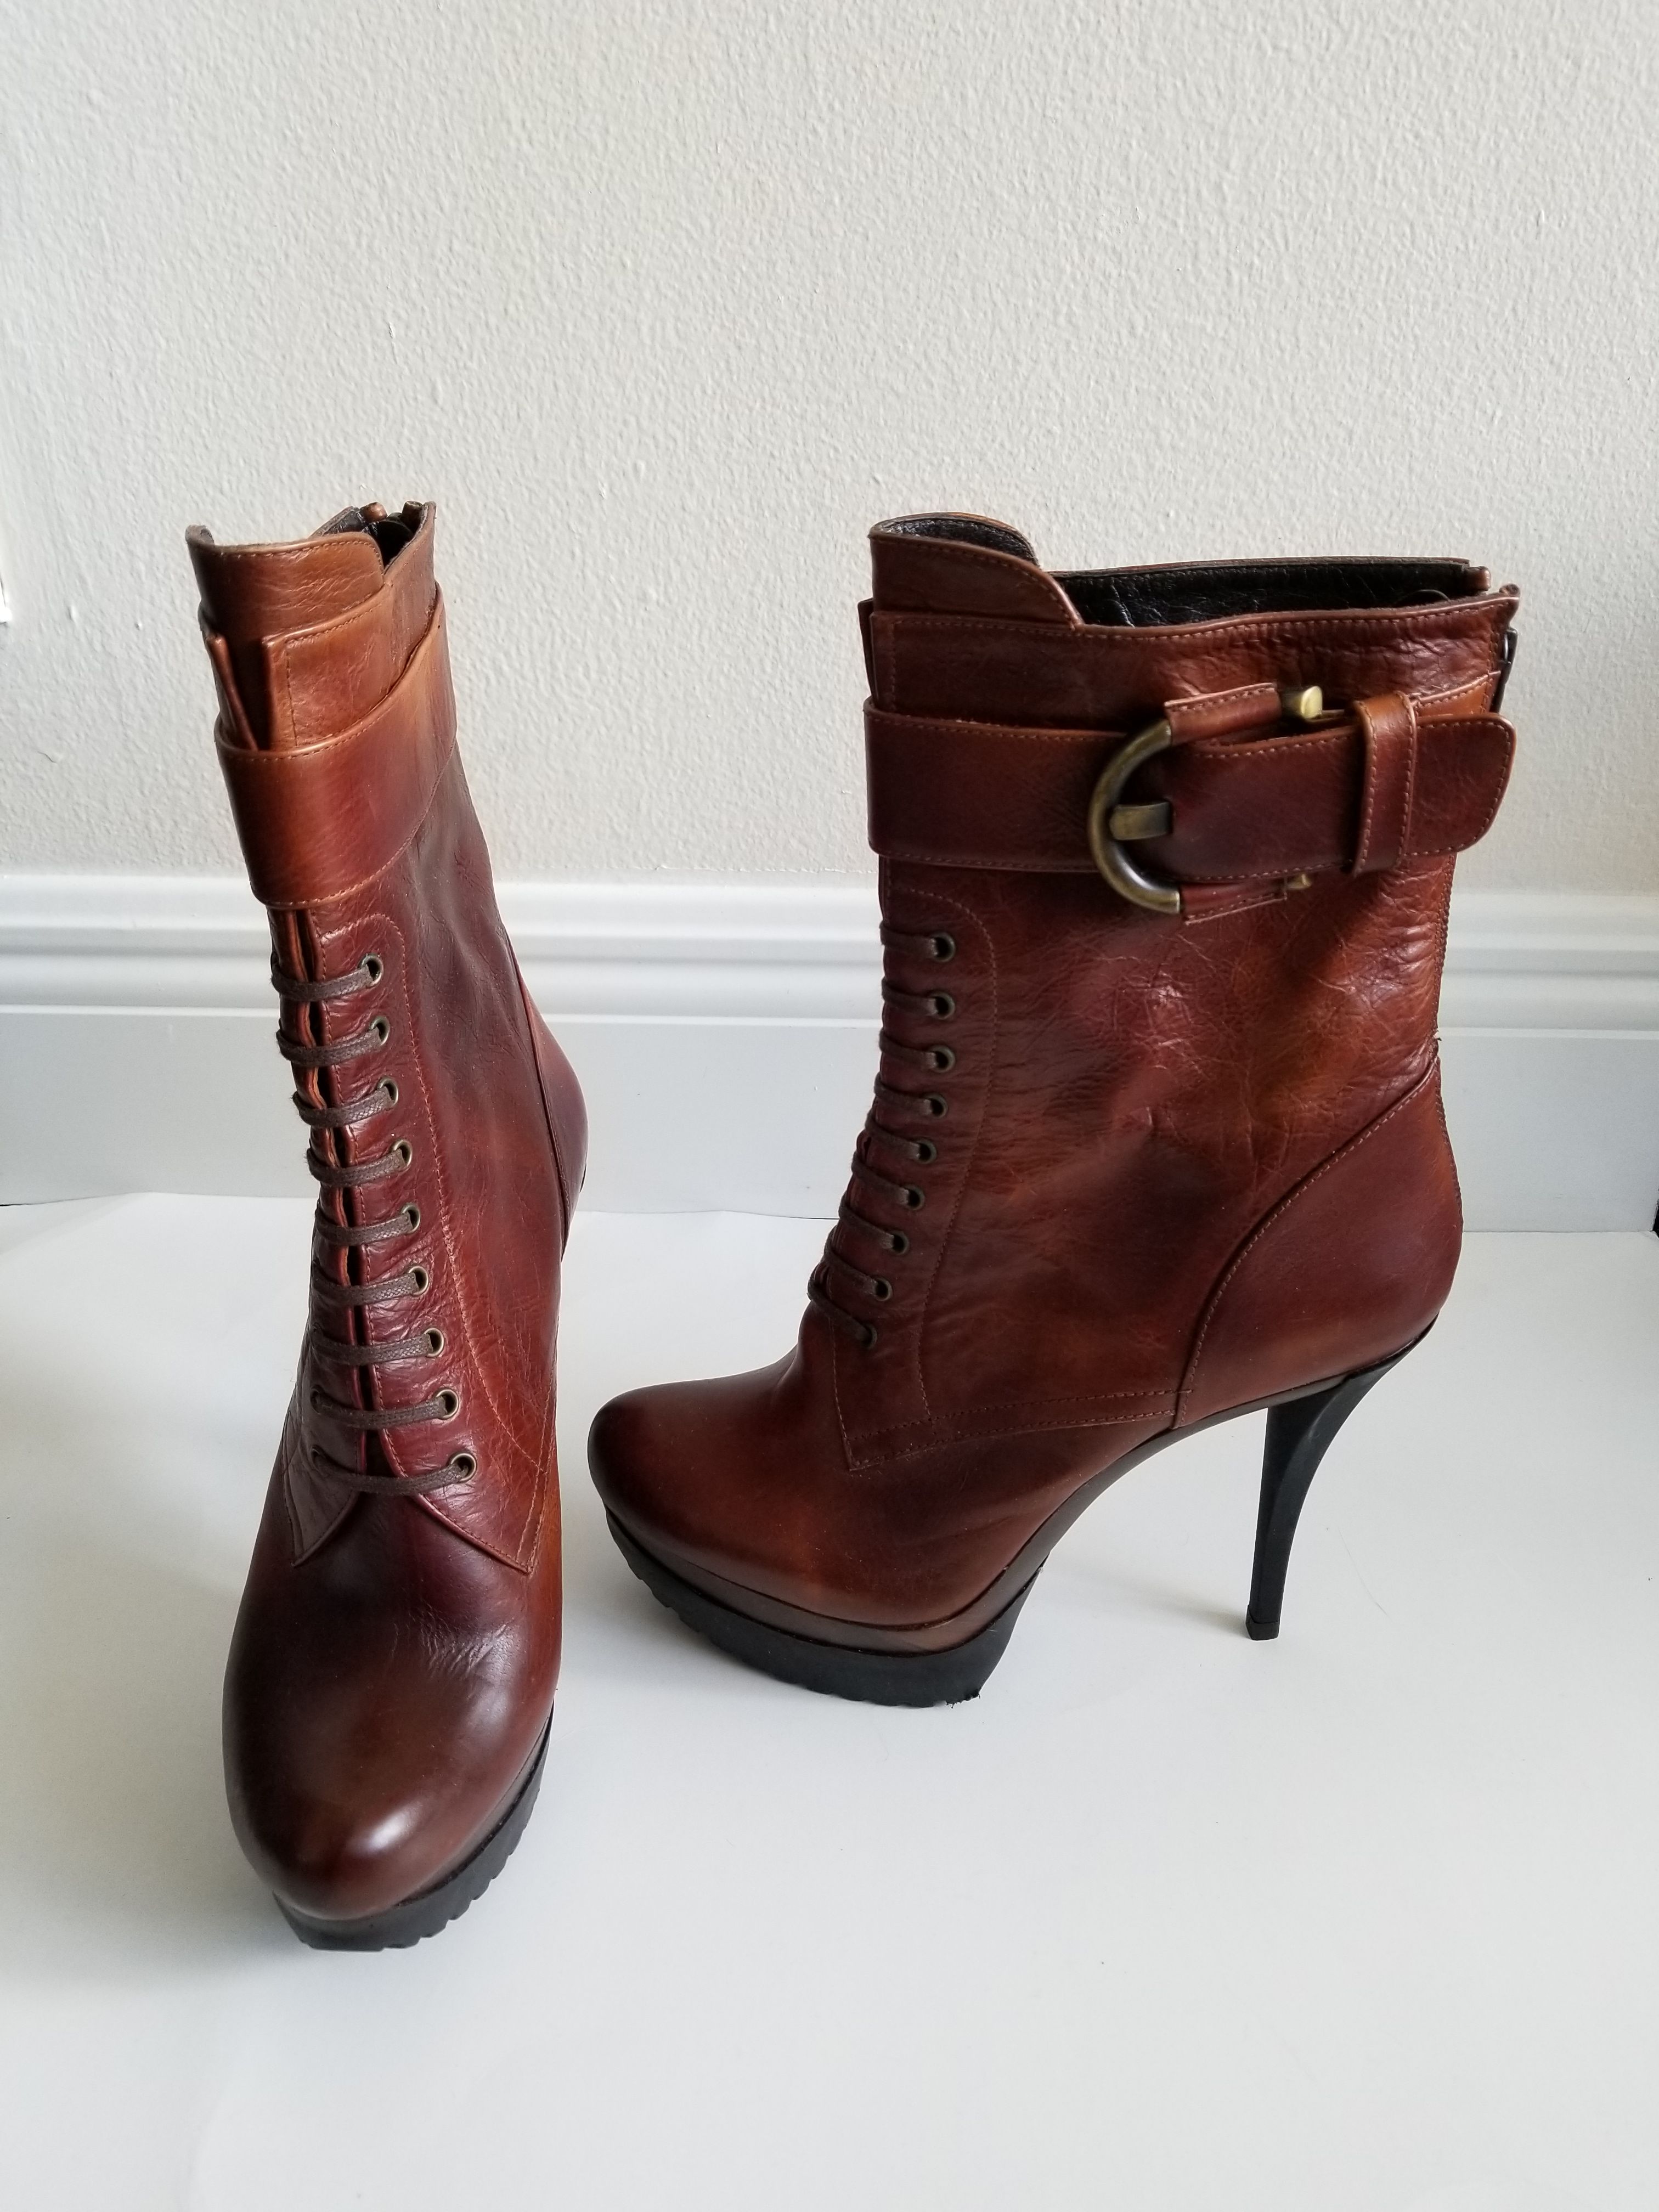 Brand new Stuart Weitzman leather mid calf boots size 6.5